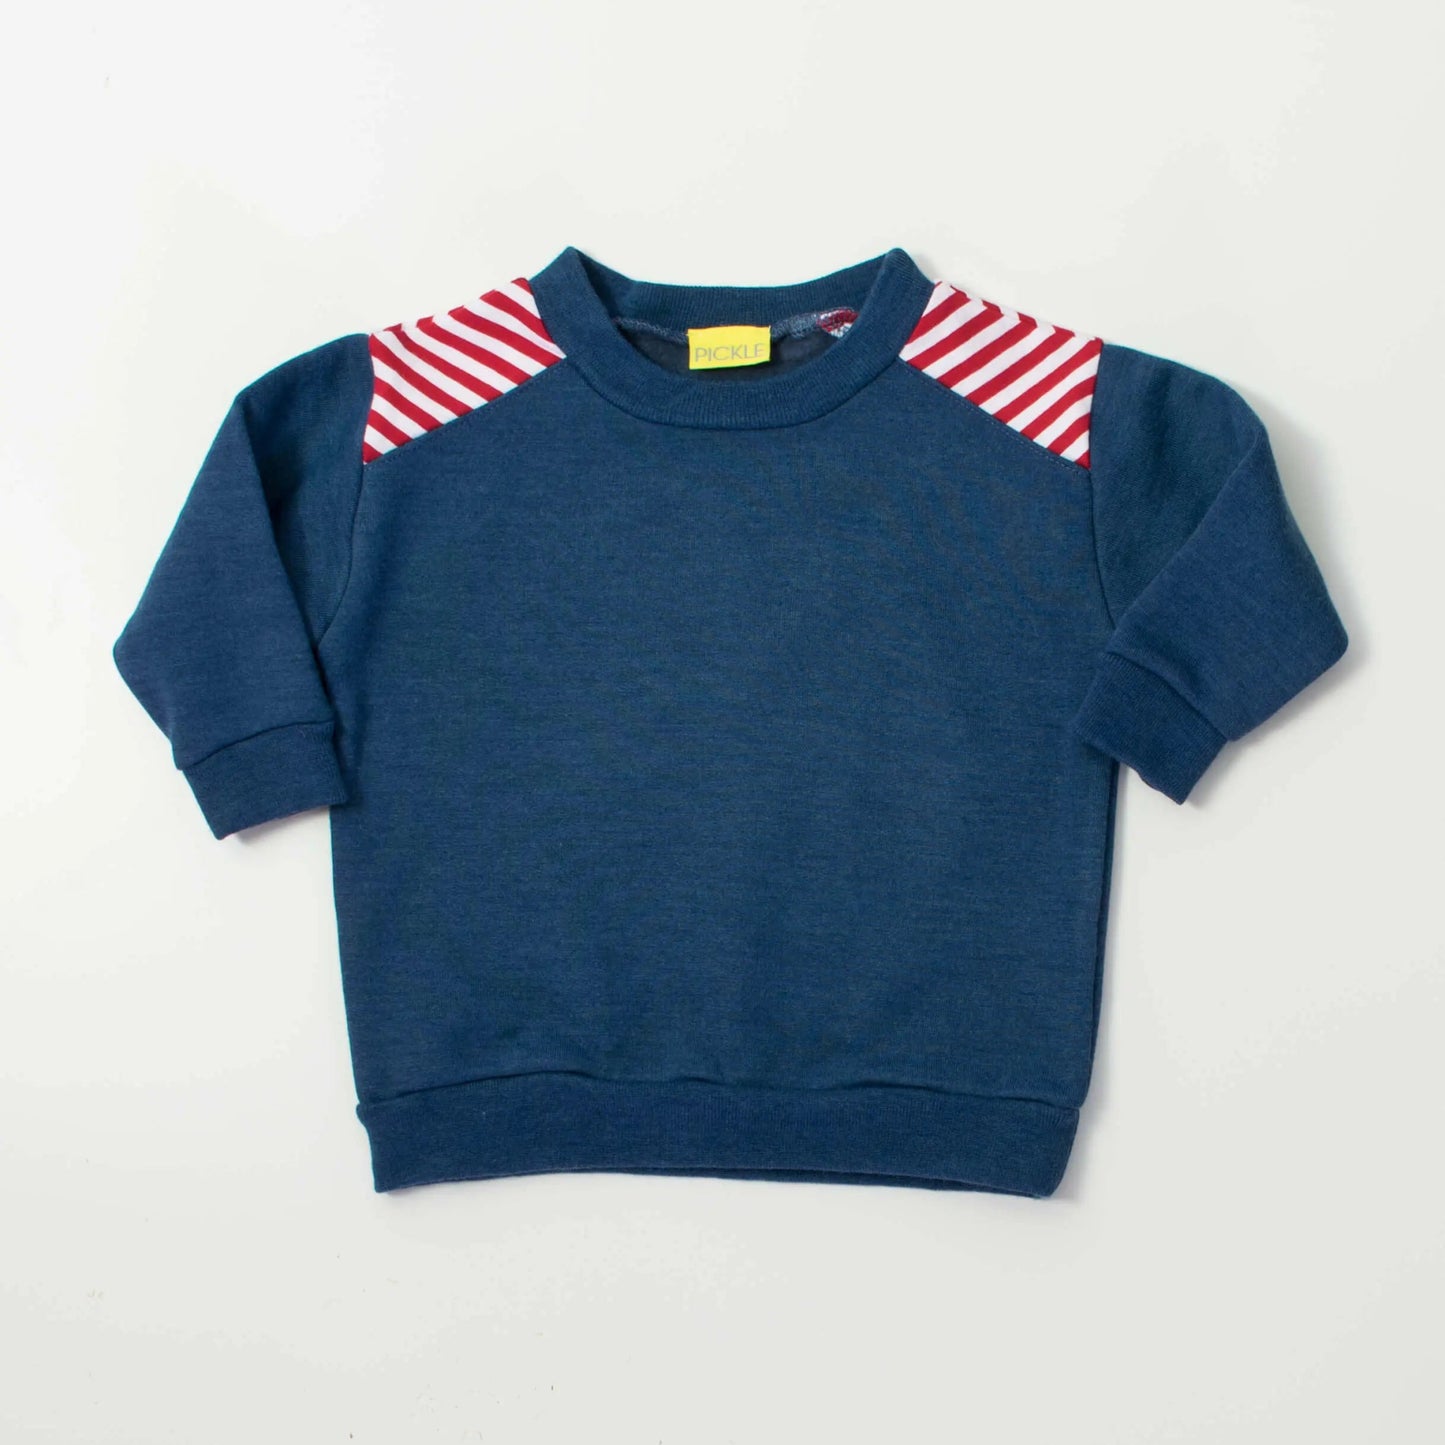 Stripes Sweatshirt - Pickle.co.uk